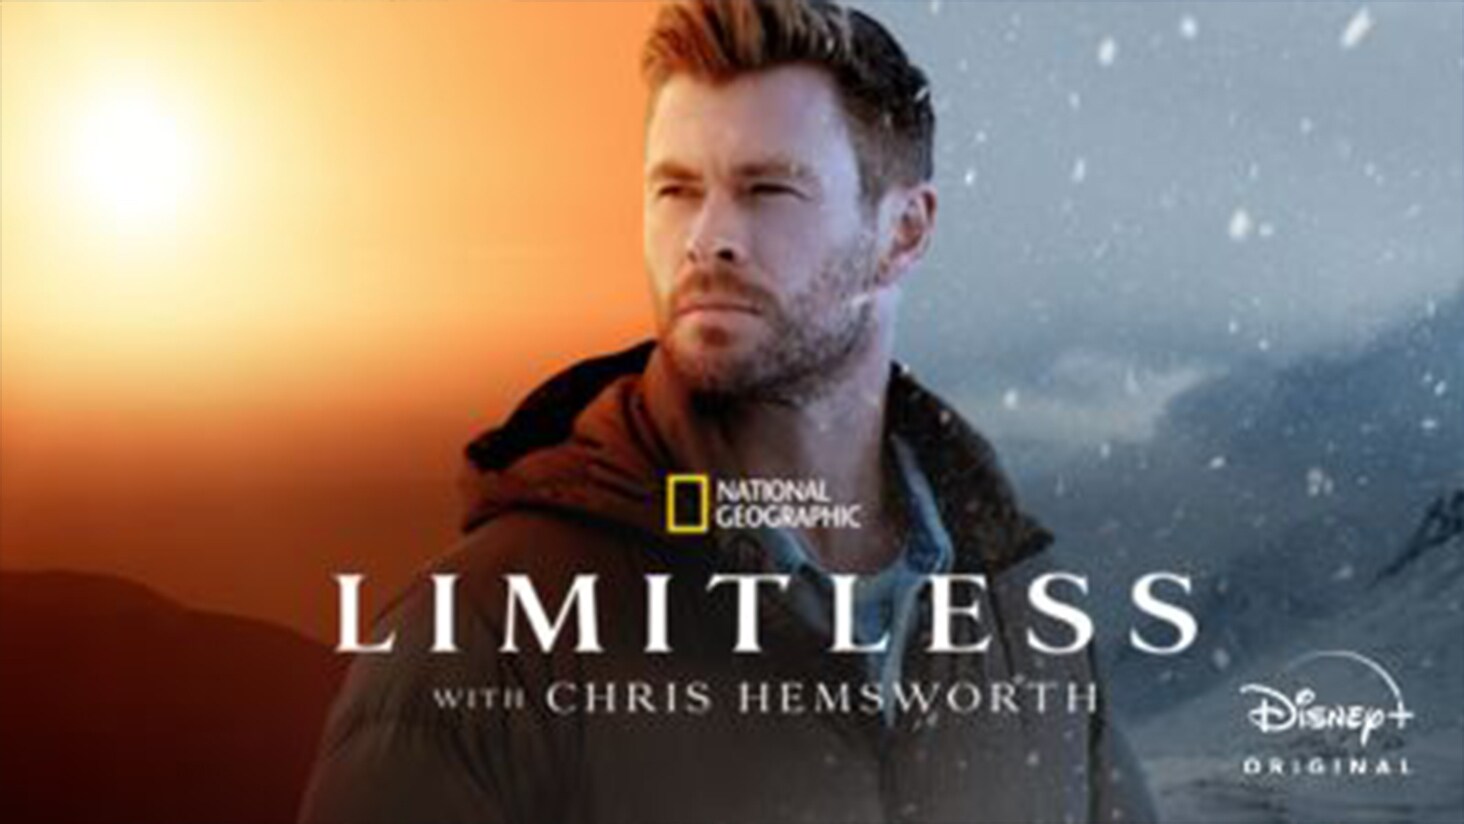 An image of Chris Hemsworth split between an image of a hot arid landscape and frozen snowing landscape.